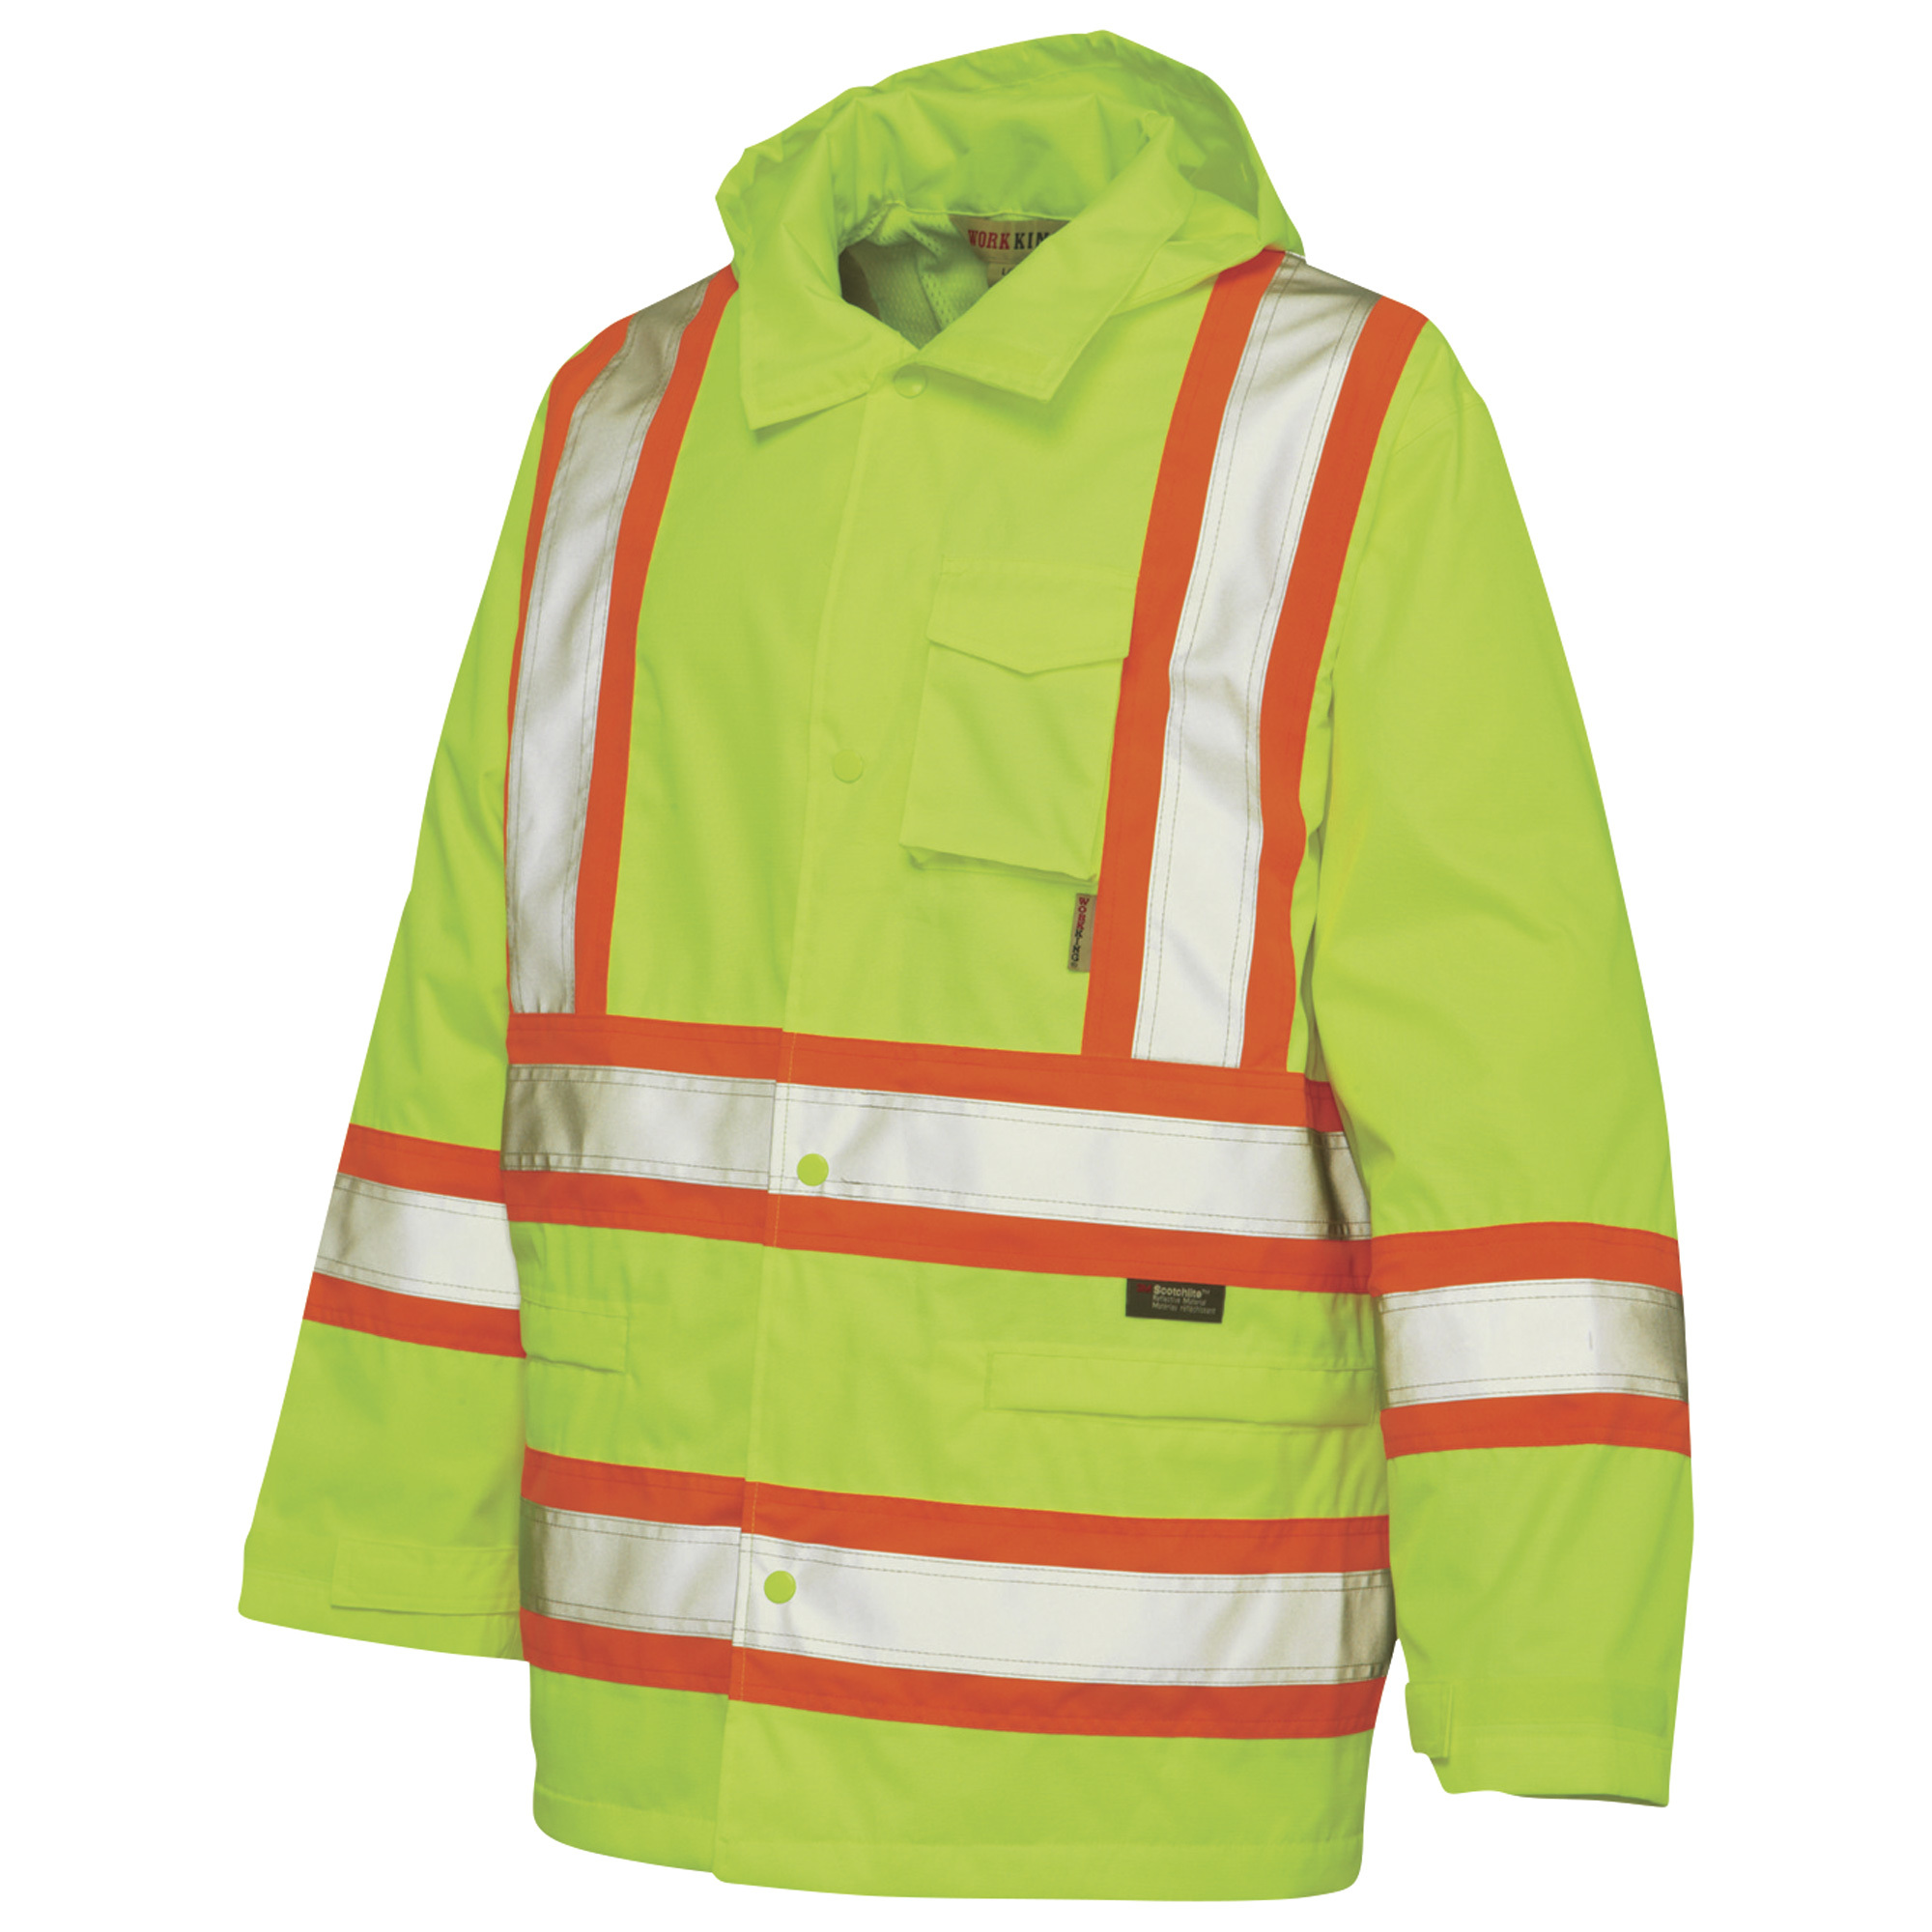 Work King Men's Class 2 High Visibility Rain Jacket â Lime, Large, Model S37211-FLGR-L